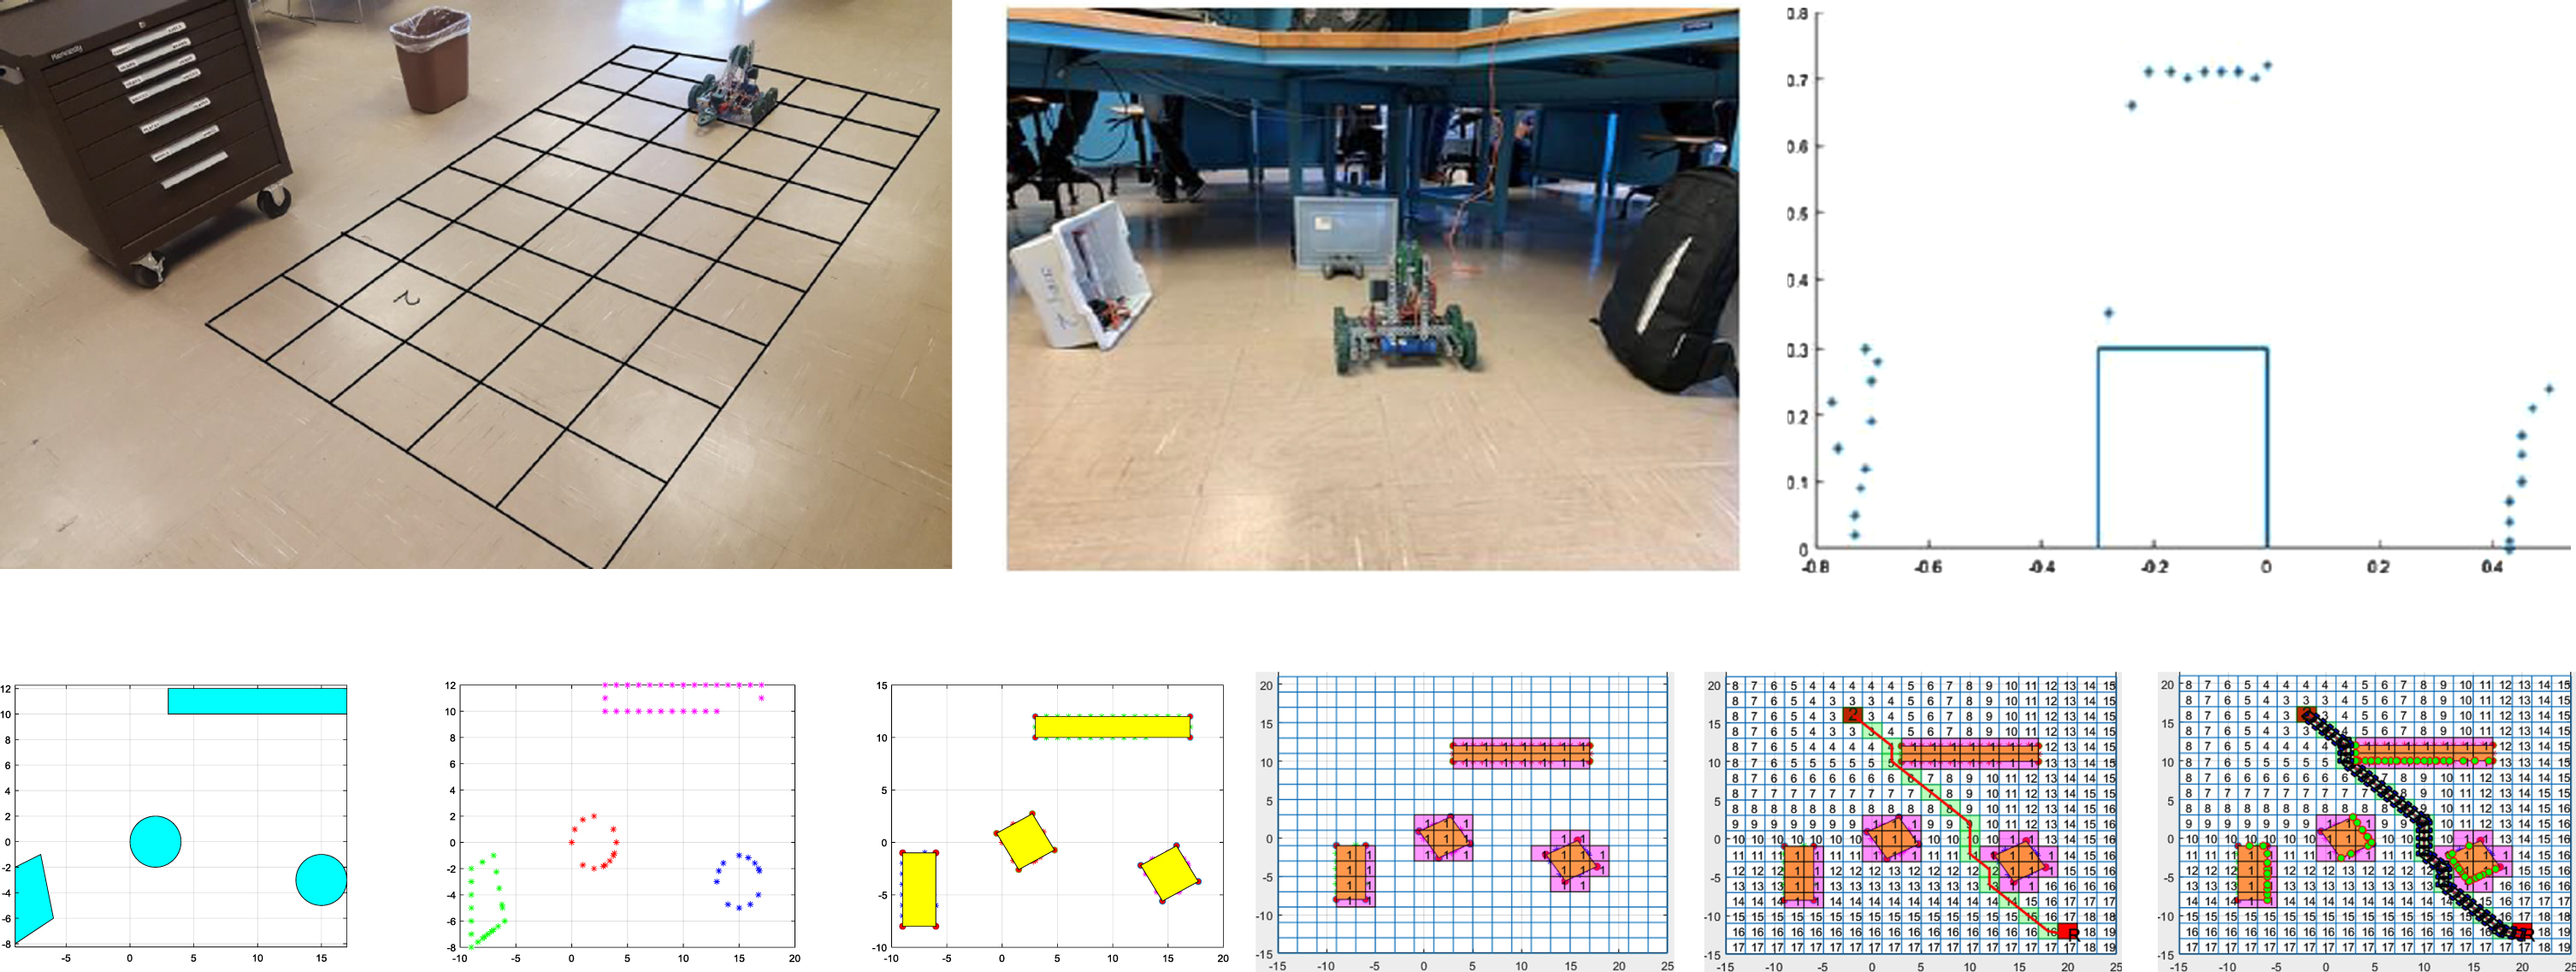 Path planning of an autonomous mobile robot: physical vs. simulation.